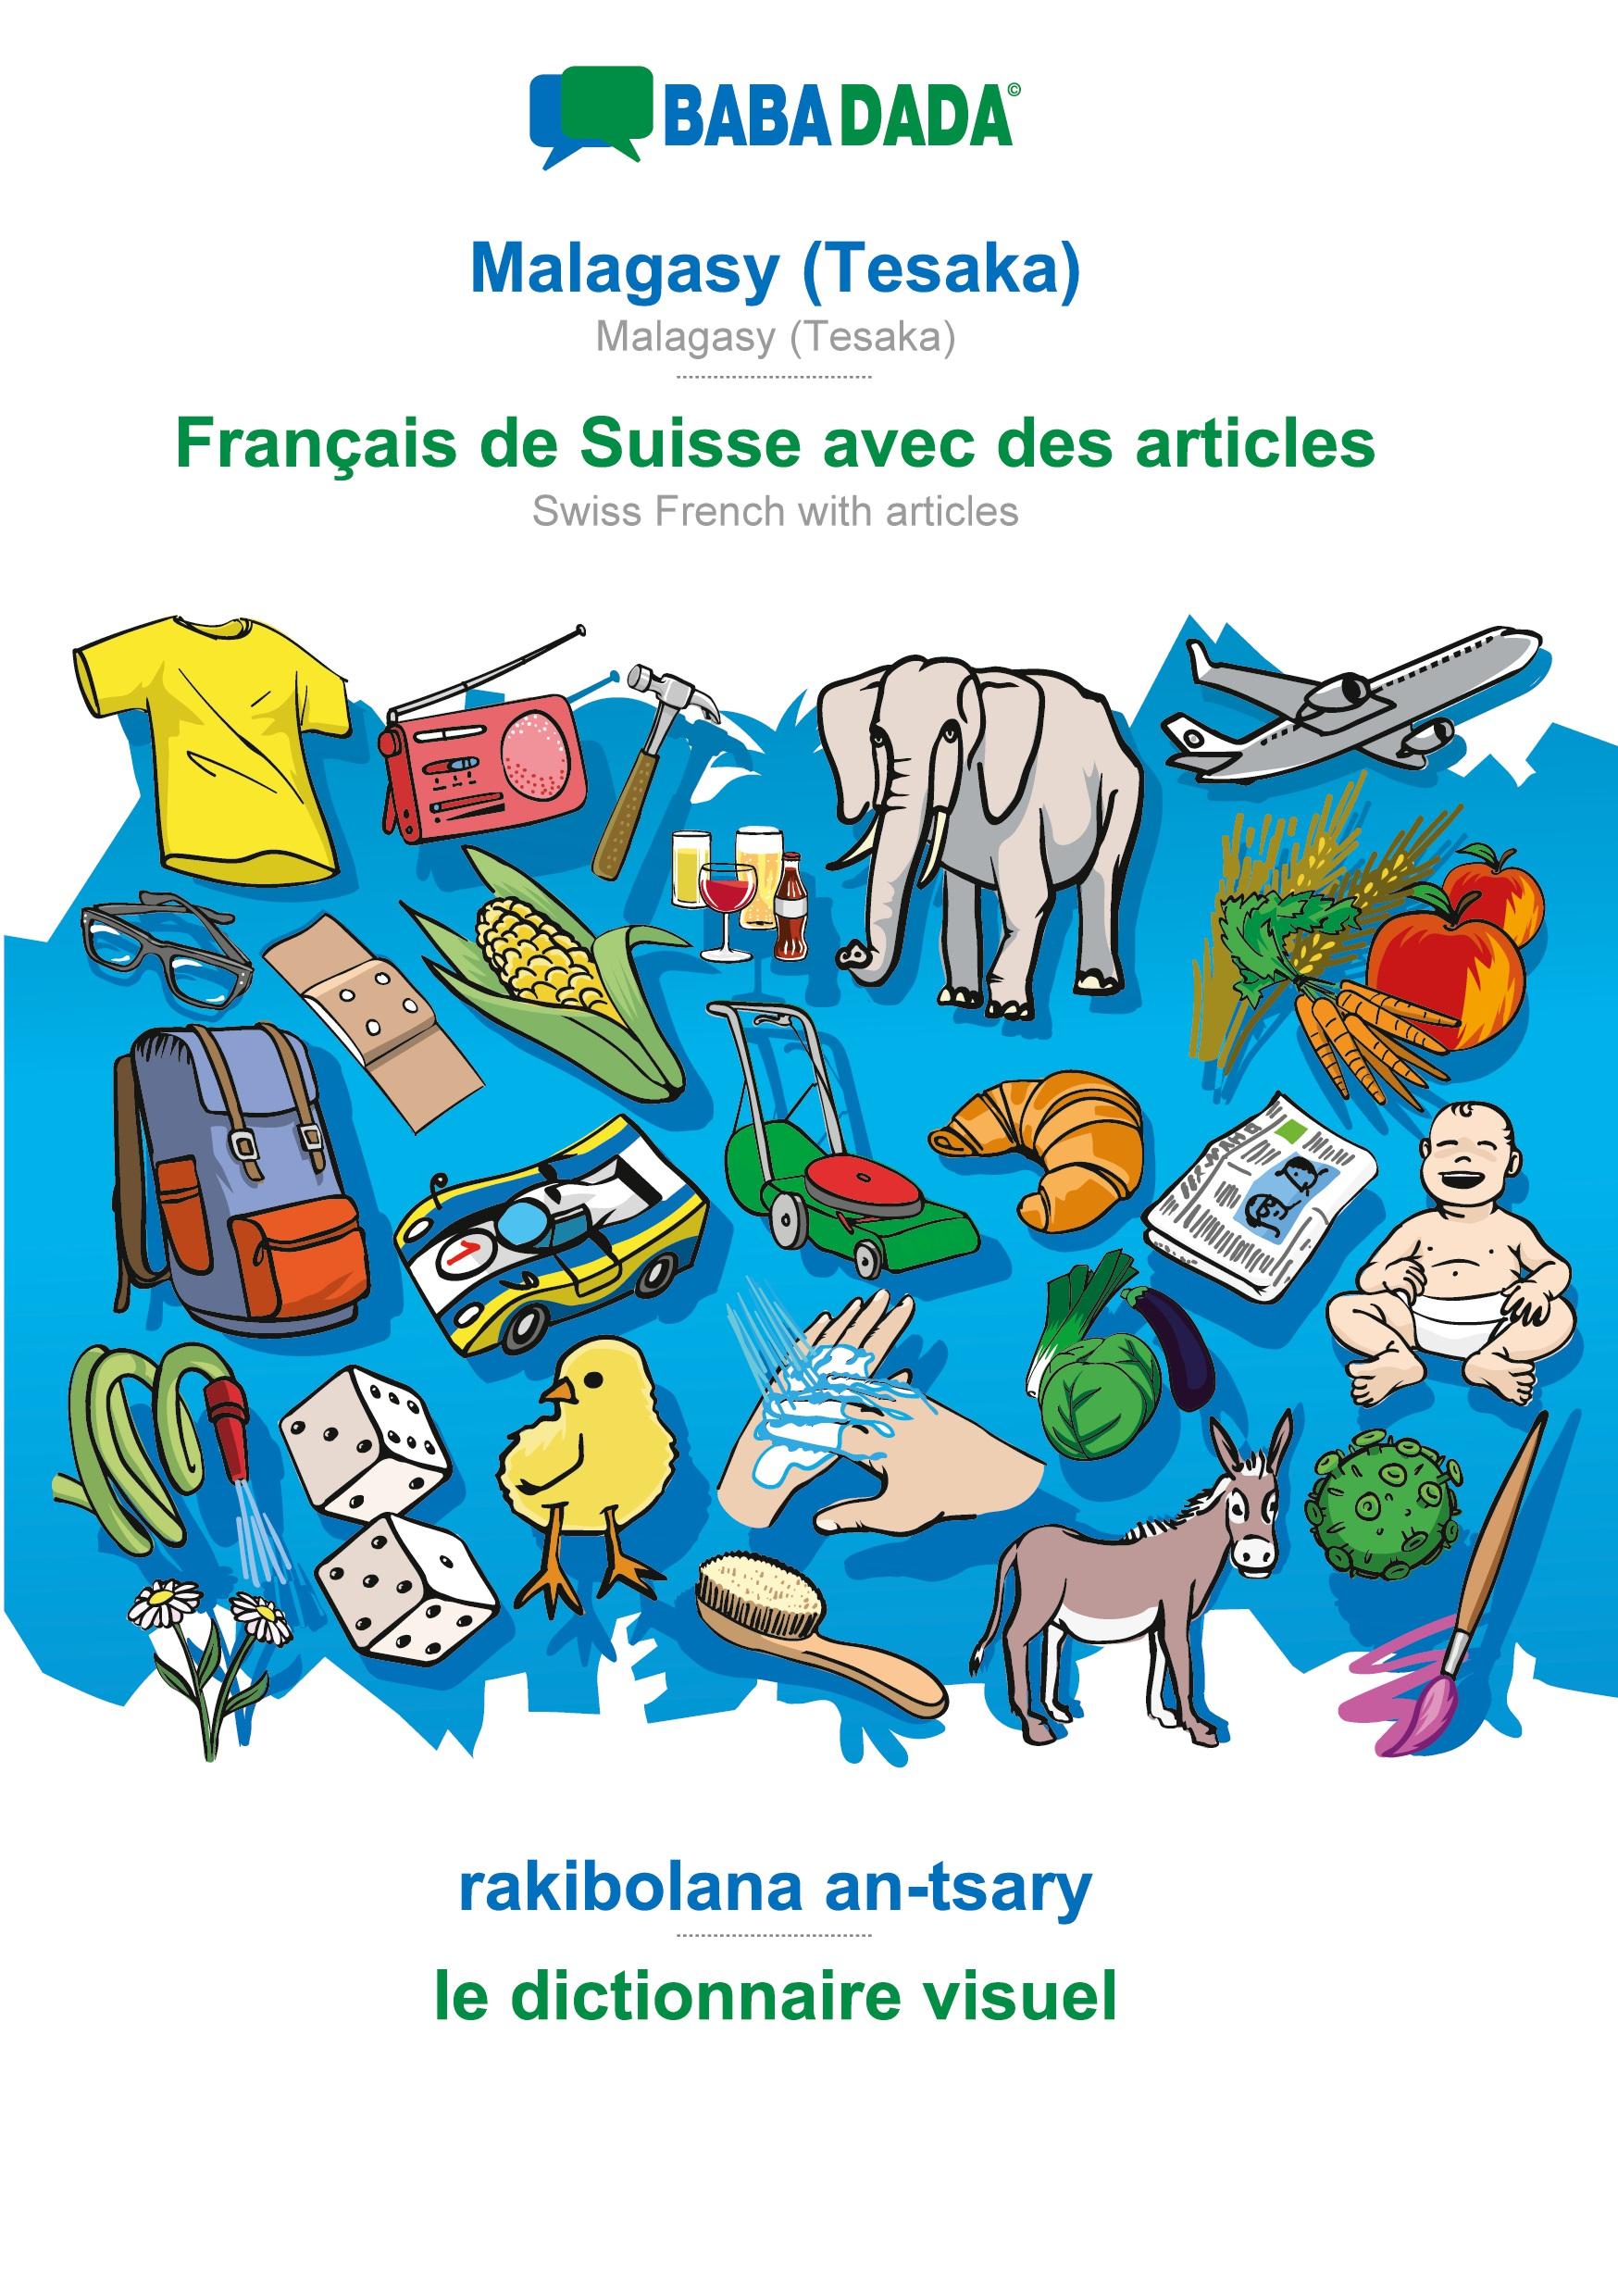 BABADADA, Malagasy (Tesaka) - Français de Suisse avec des articles, rakibolana an-tsary - le dictionnaire visuel - Babadada Gmbh